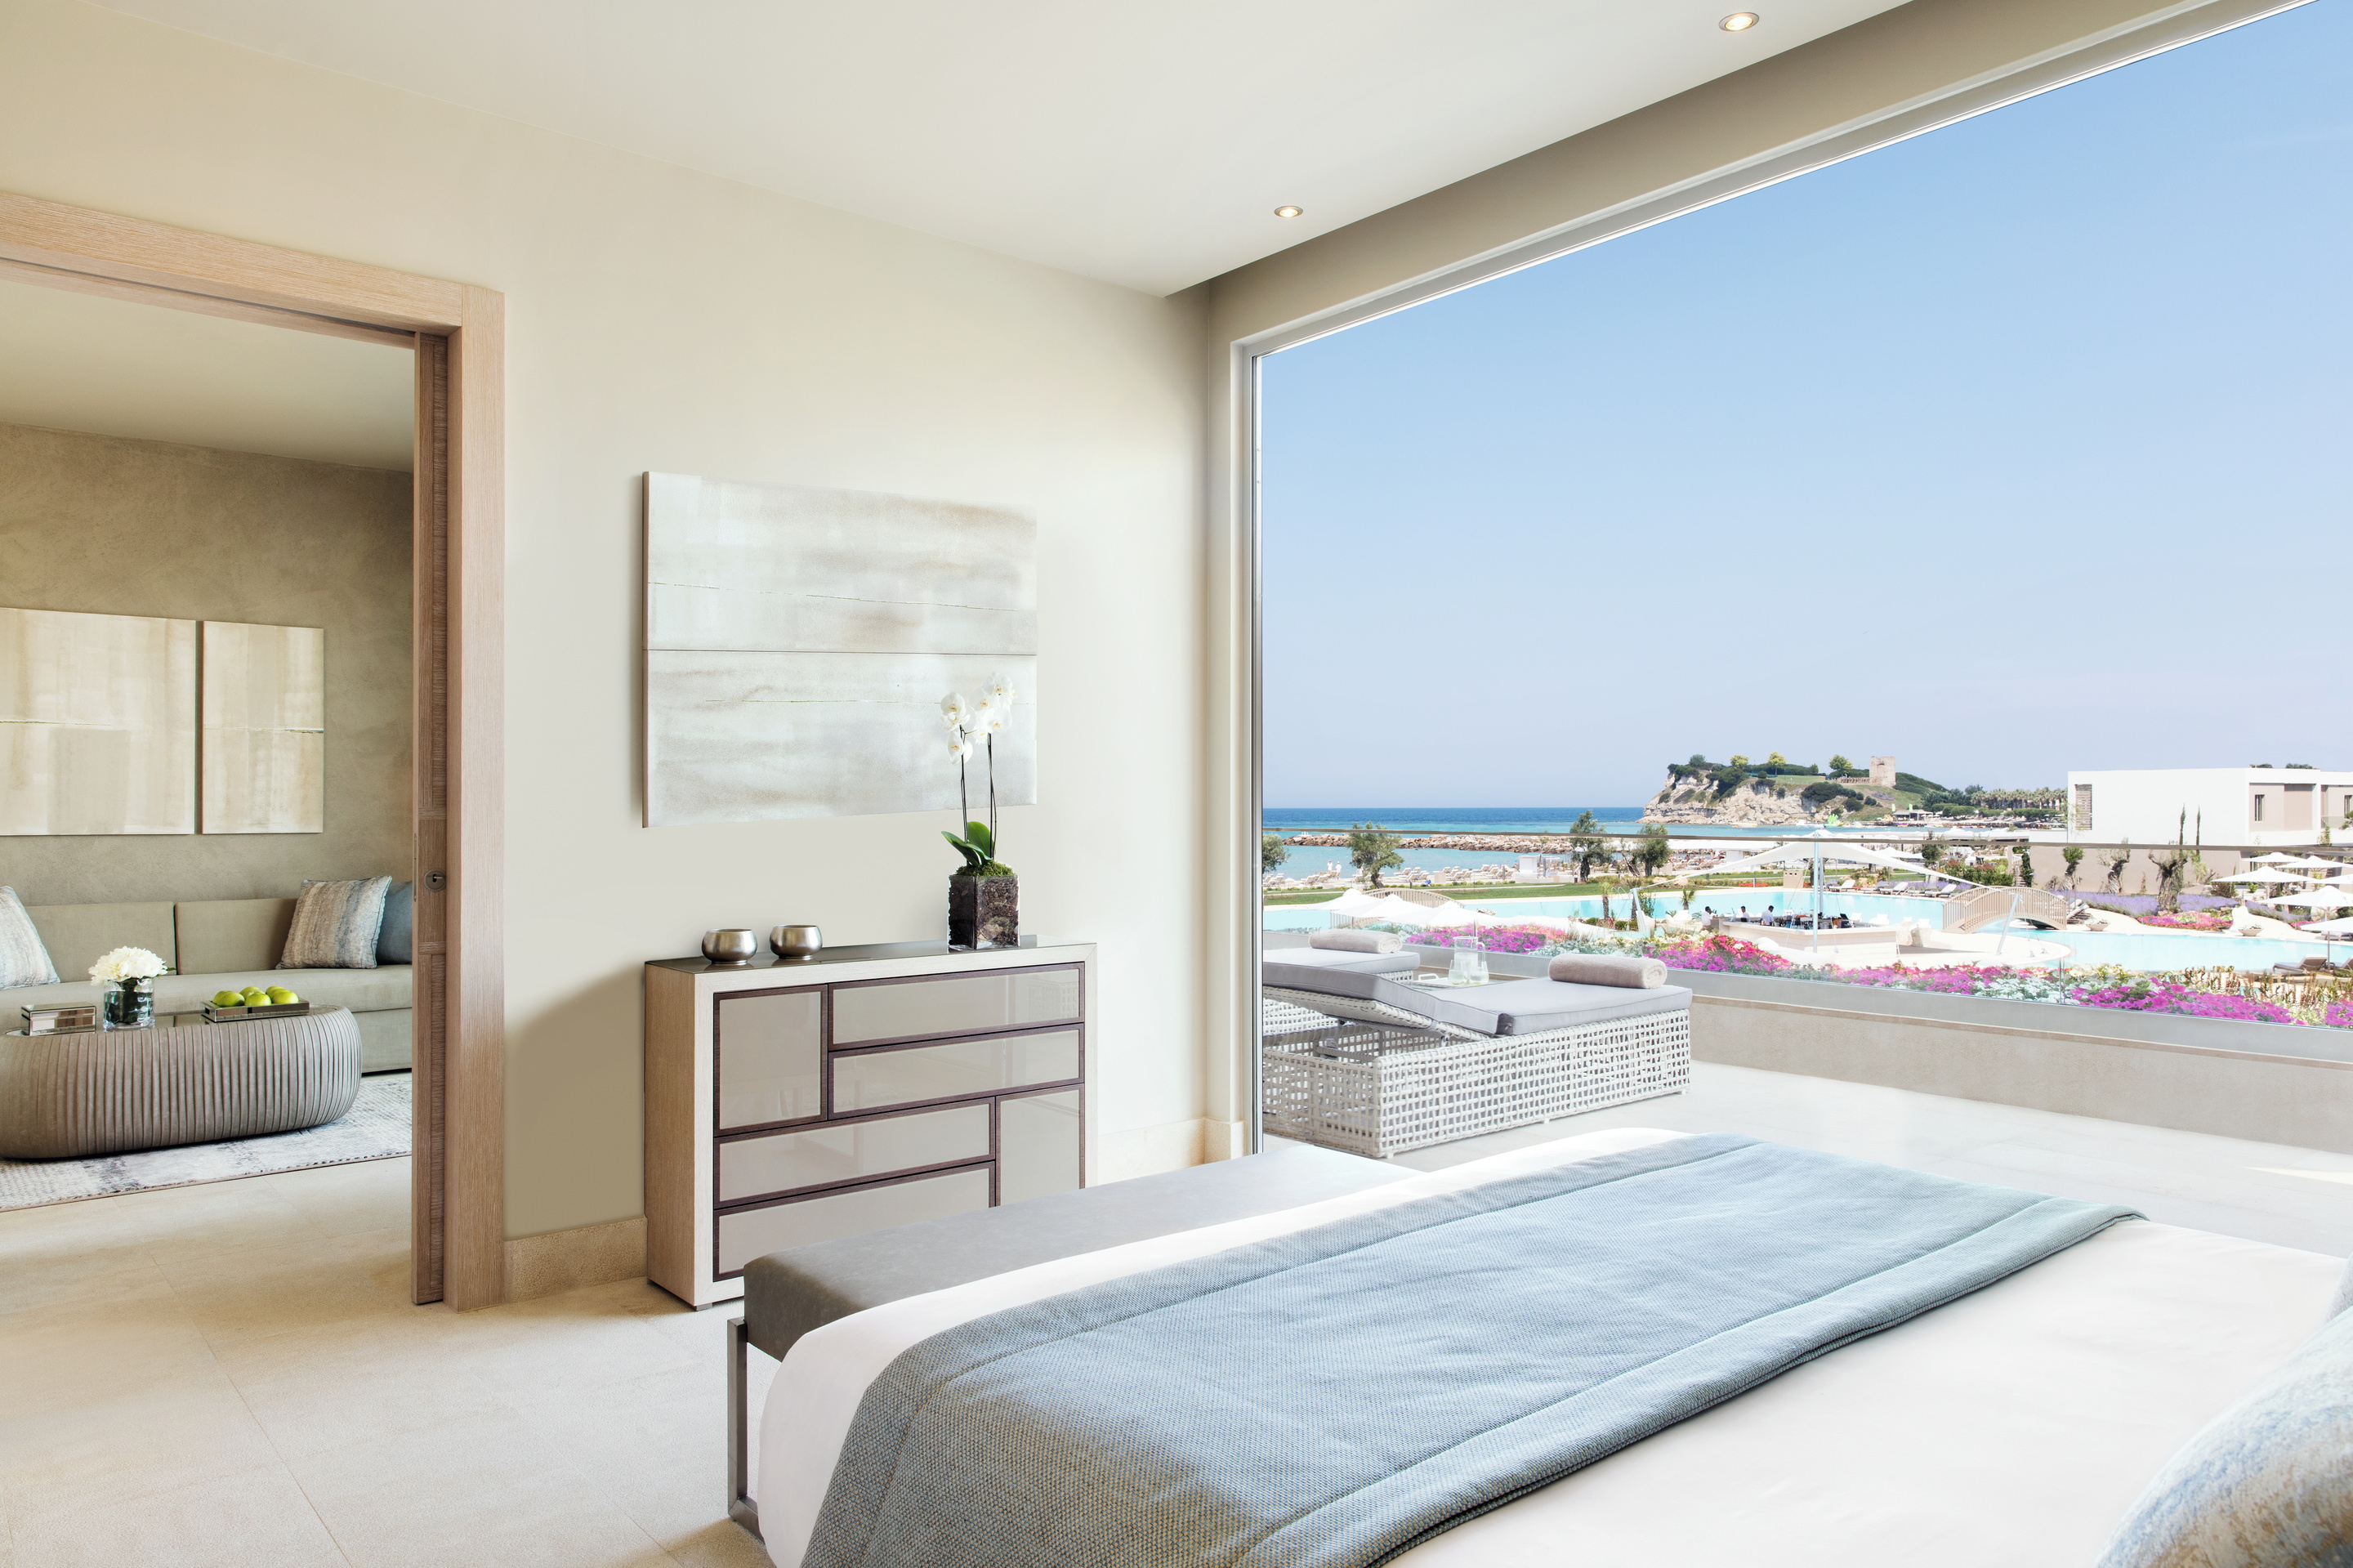 Deluxe One Bedroom Suite Grand Balcony Sea View, Sani Dunes, Chalkidiki